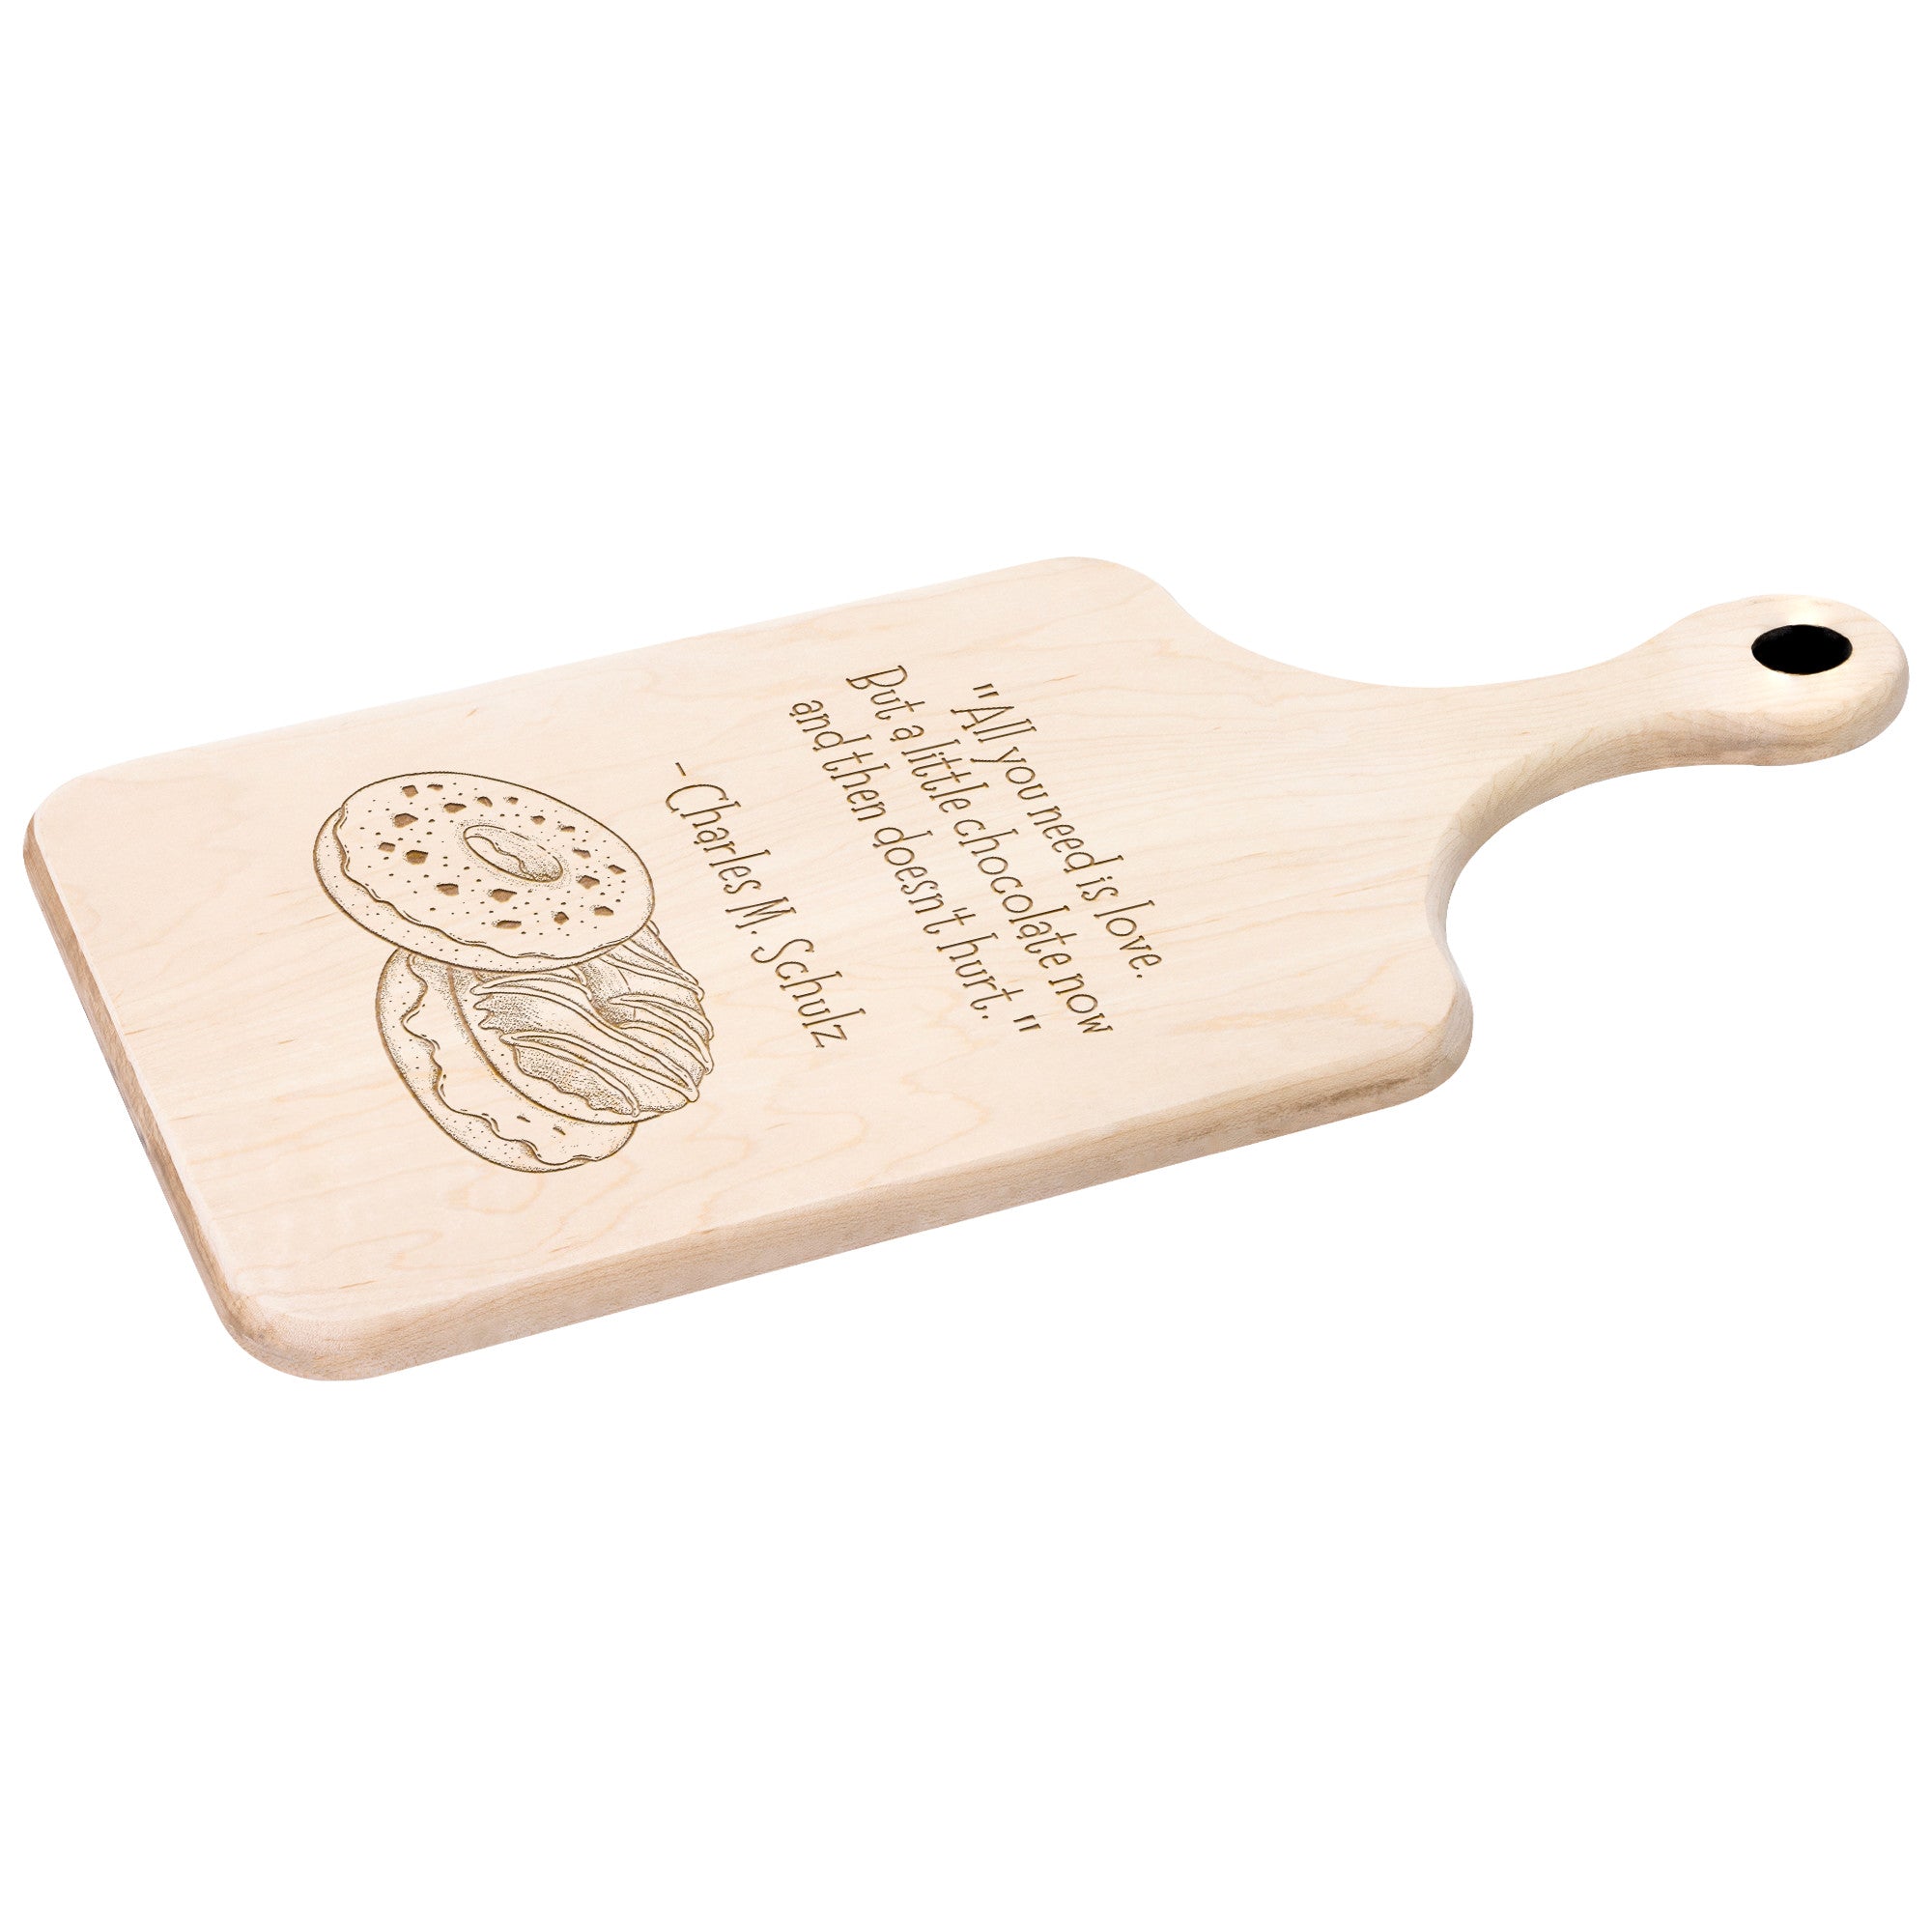 Hardwood Paddle Cutting Board - Variant 04